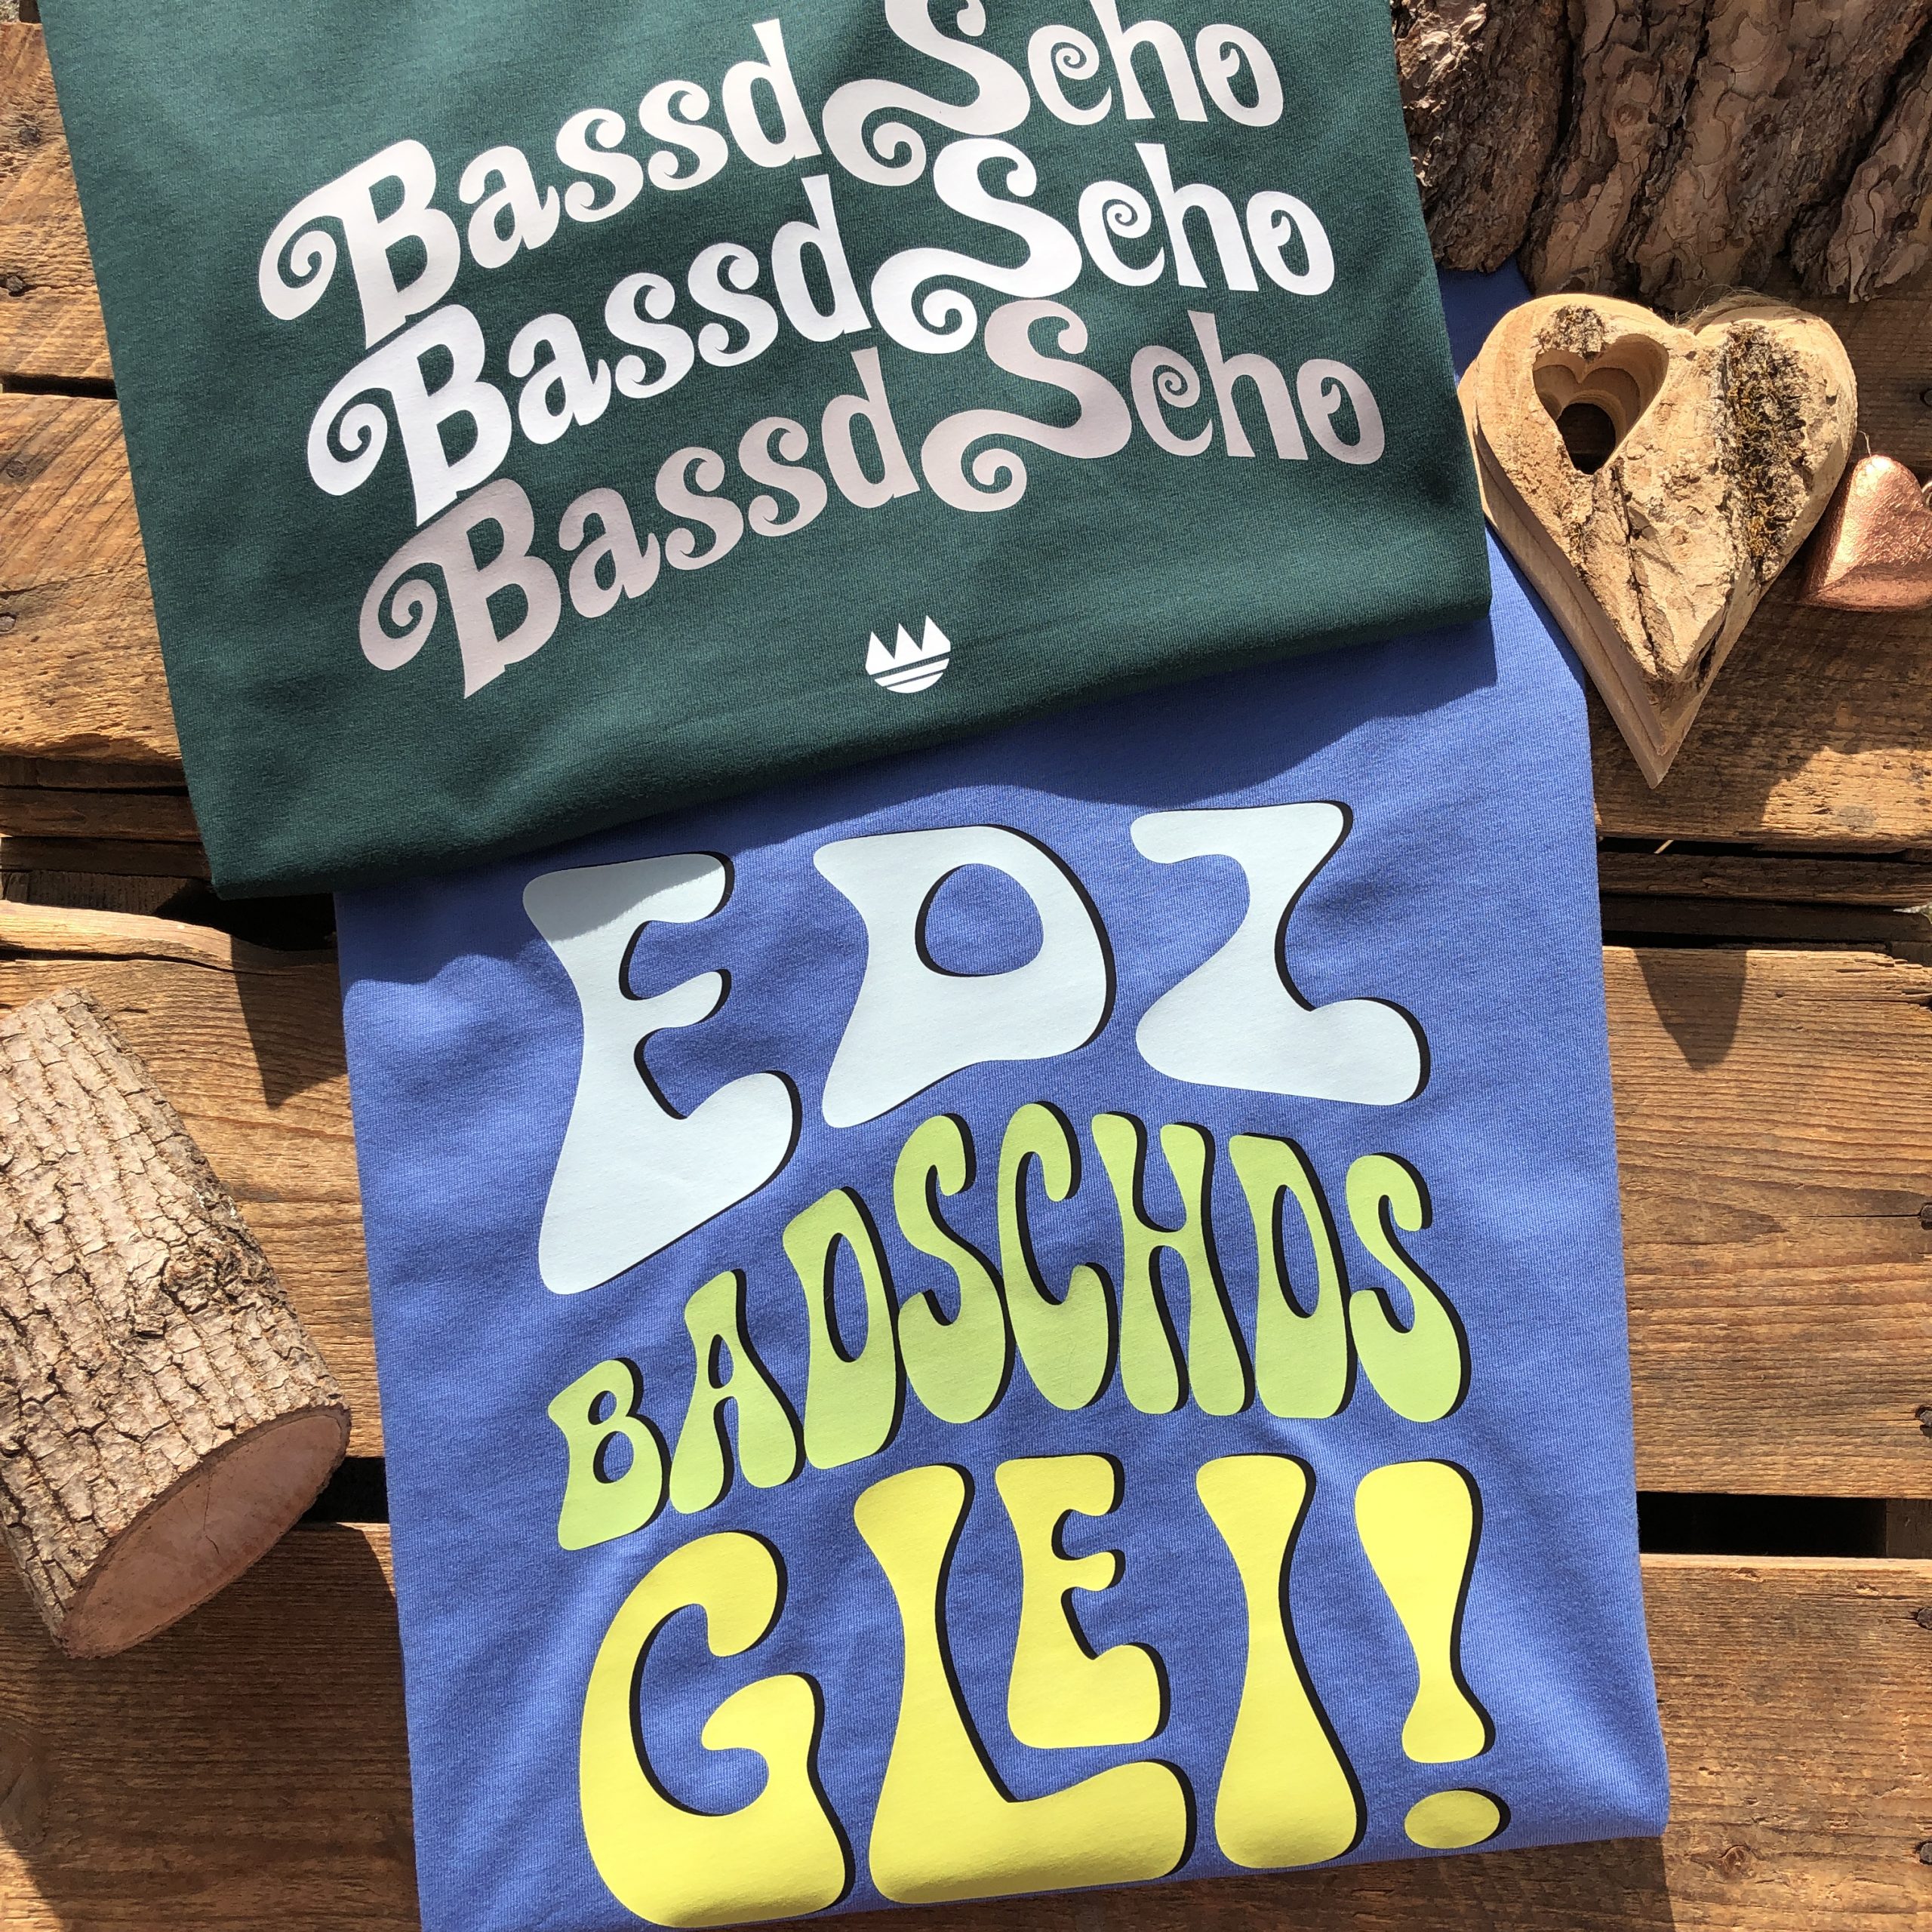 Edz Badschds Glei Shirt Frankenstyle